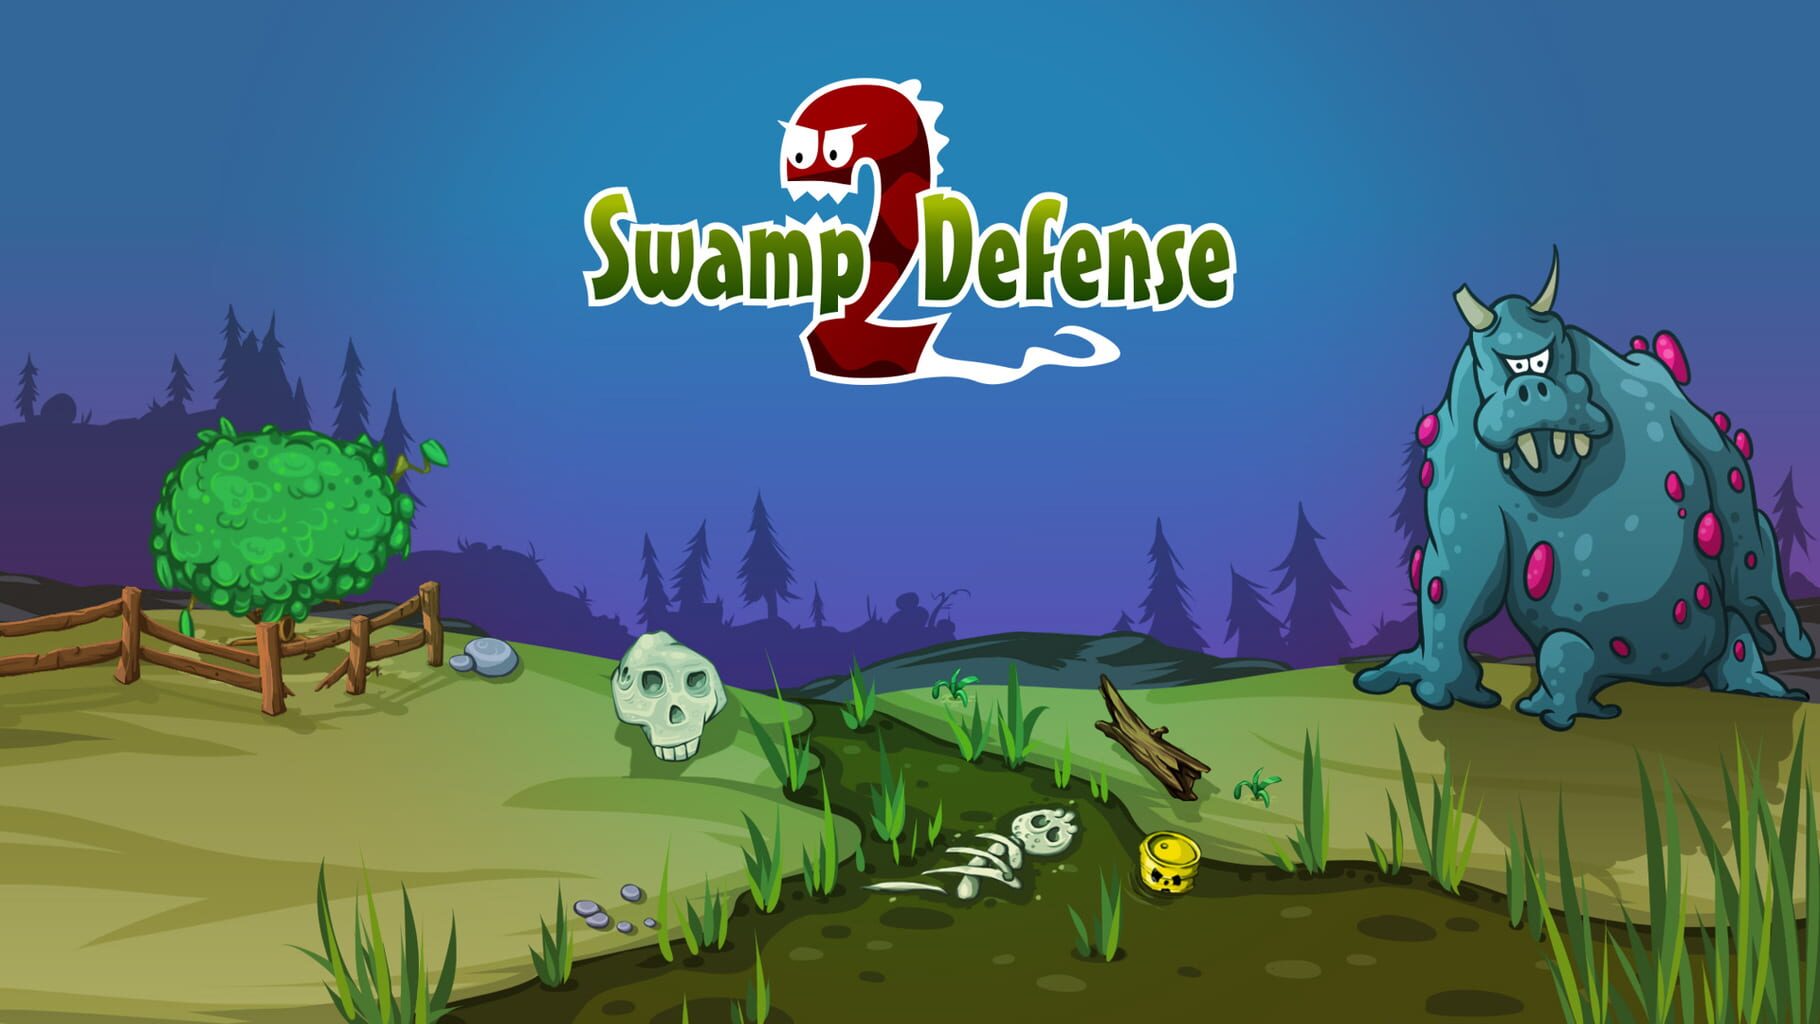 Arte - Swamp Defense 2